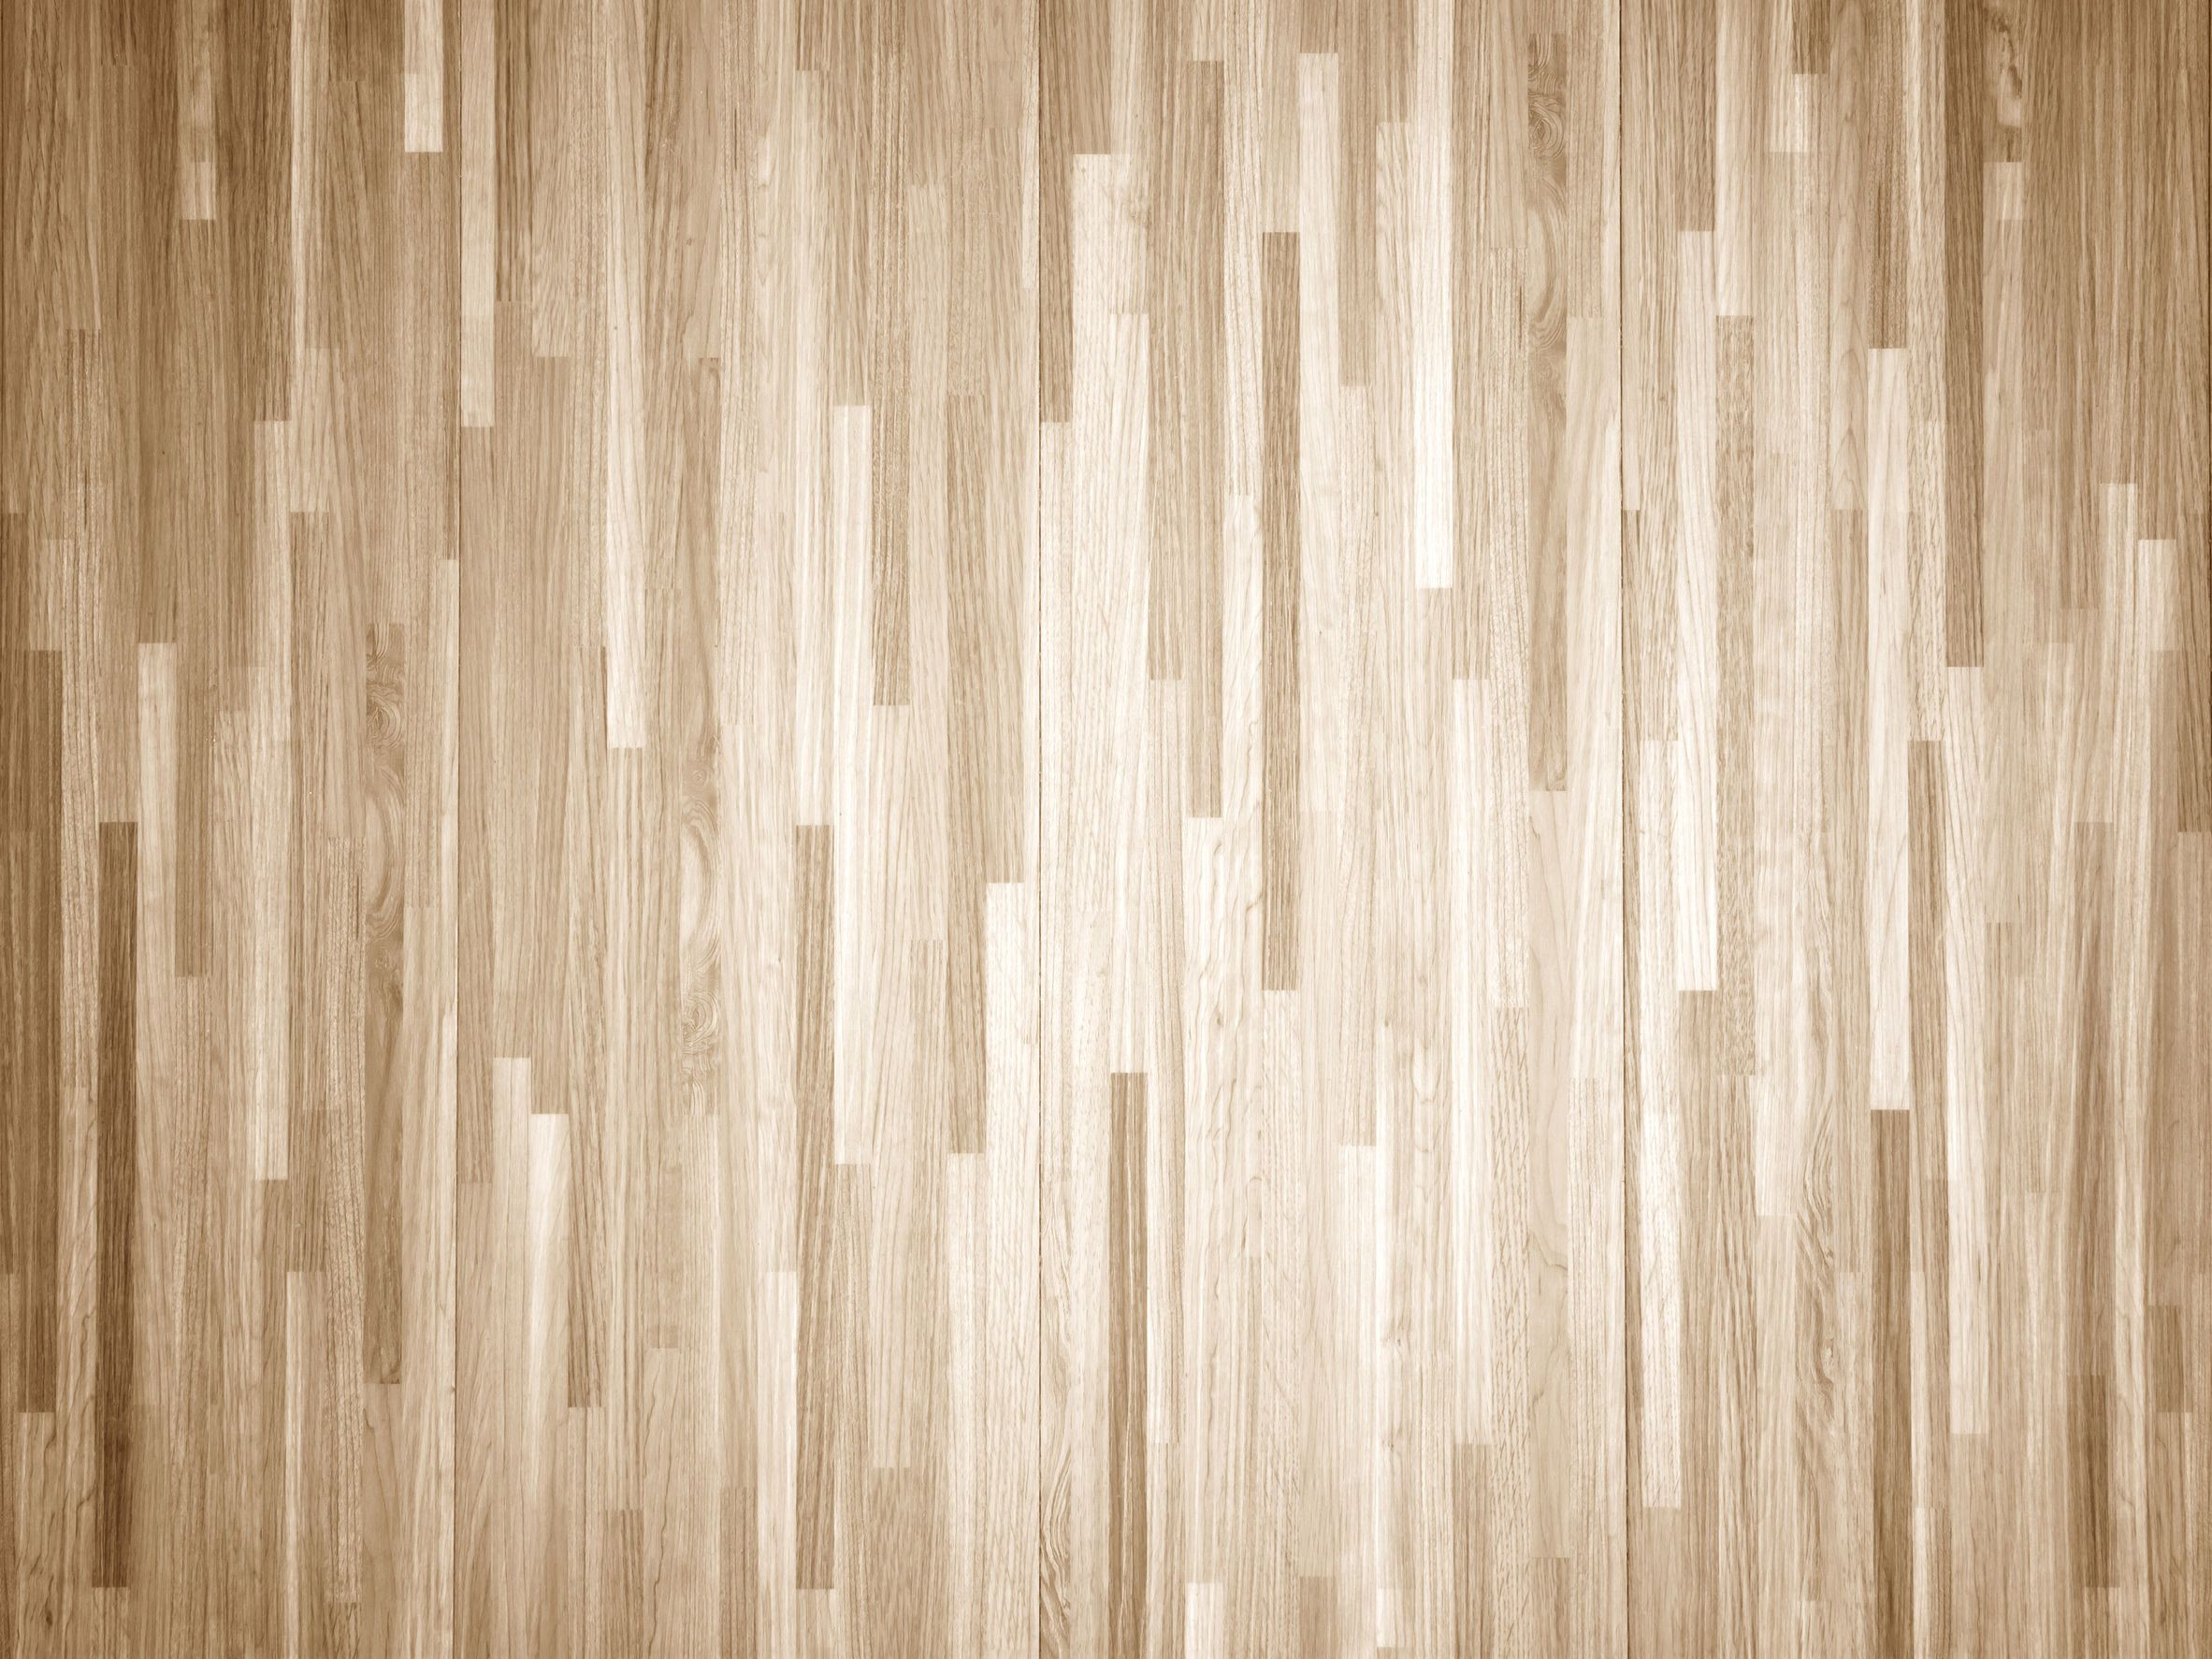 24 Spectacular Hardwood Flooring Washington Dc 2024 free download hardwood flooring washington dc of how to chemically strip wood floors woodfloordoctor com regarding you